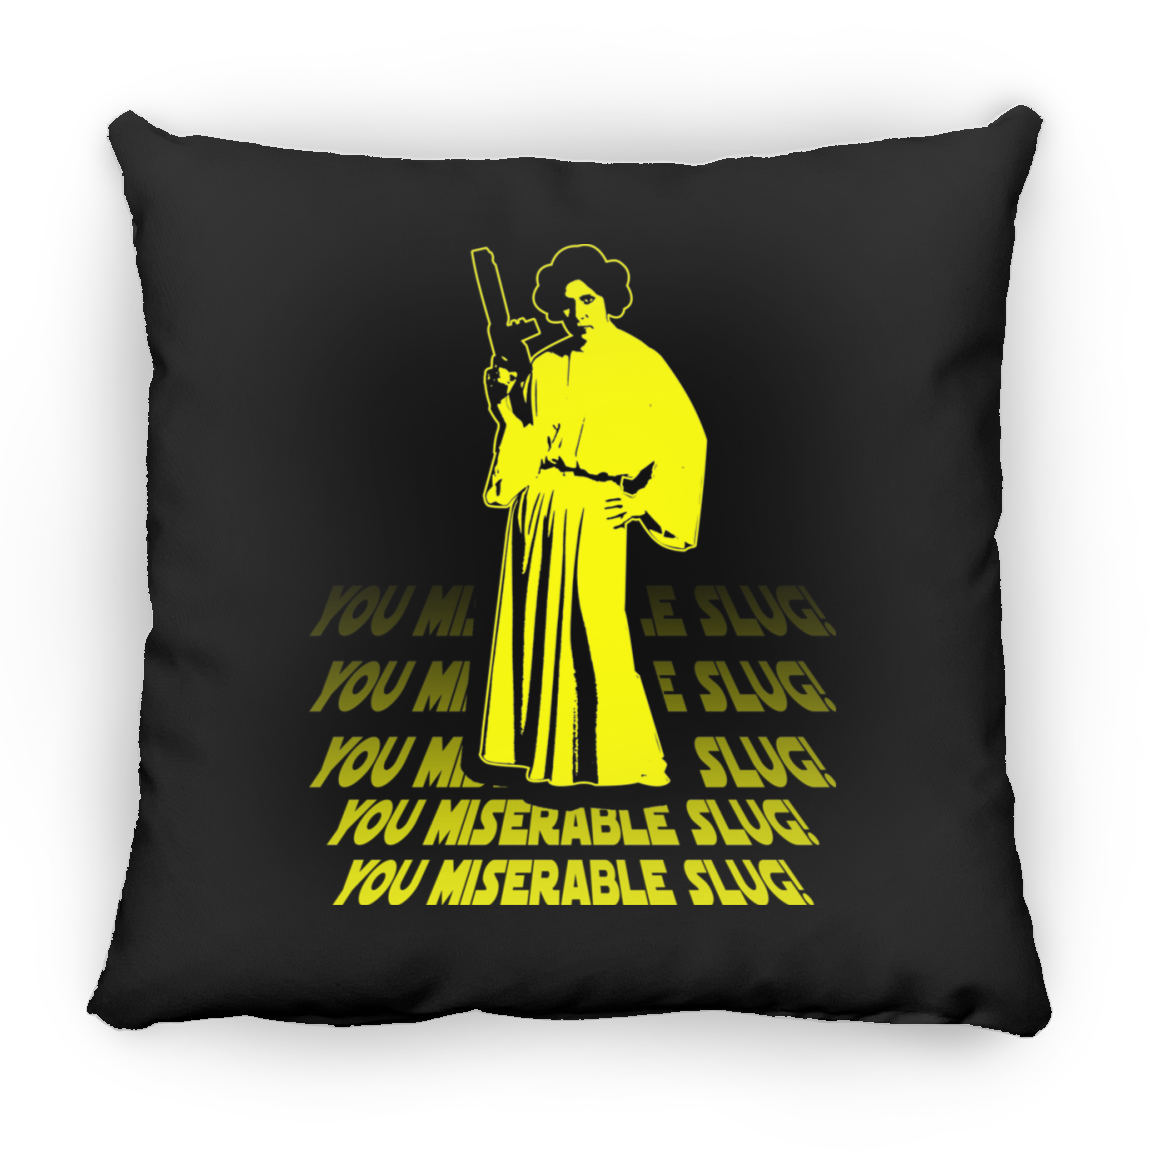 ArtichokeUSA Custom Design. You Miserable Slug. Carrie Fisher Tribute. Star Wars / Blues Brothers Fan Art. Parody. Square Pillow 18x18